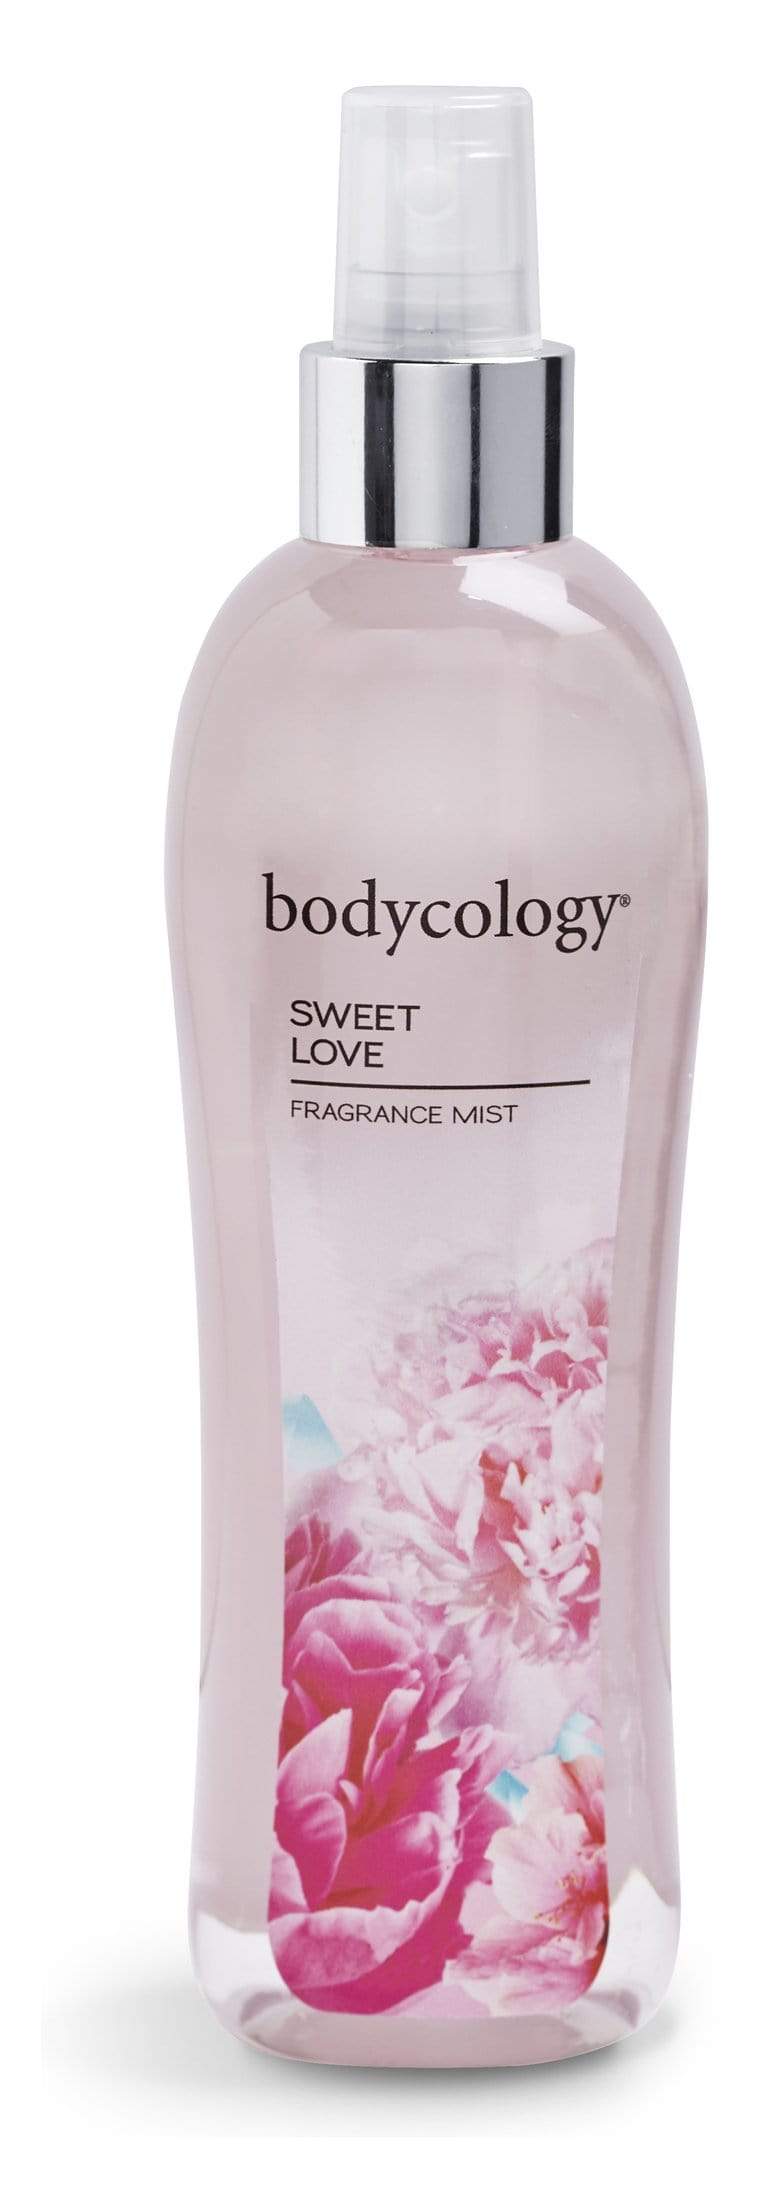 BODYCOLOGY Sweet Love  Fragrance Mist Body Spray 237 ml1017754PK - Jashanmal Home